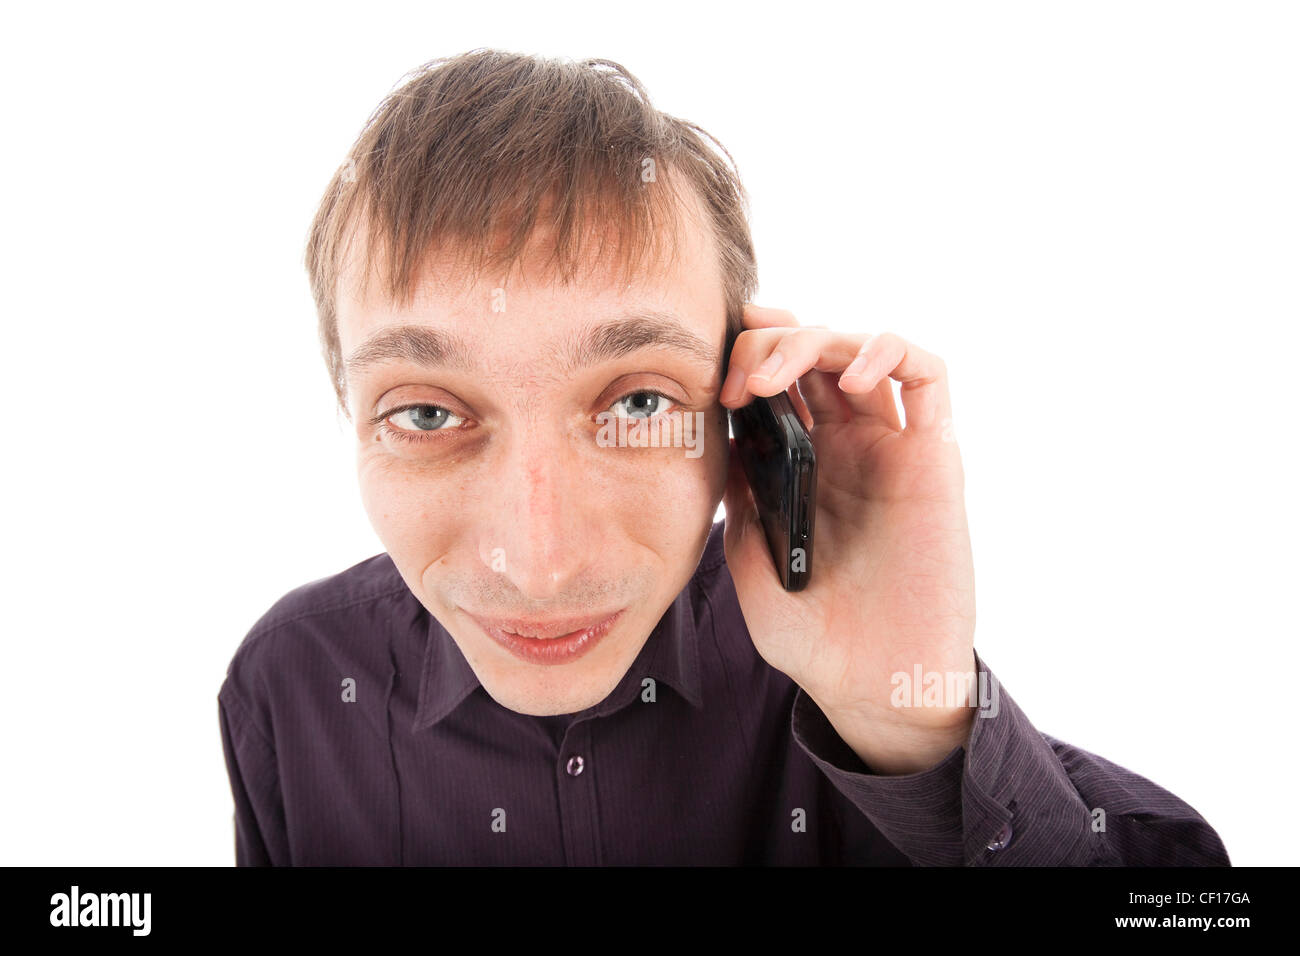 Happy weirdo nerd man on the phone, isolated on white background. Stock Photo